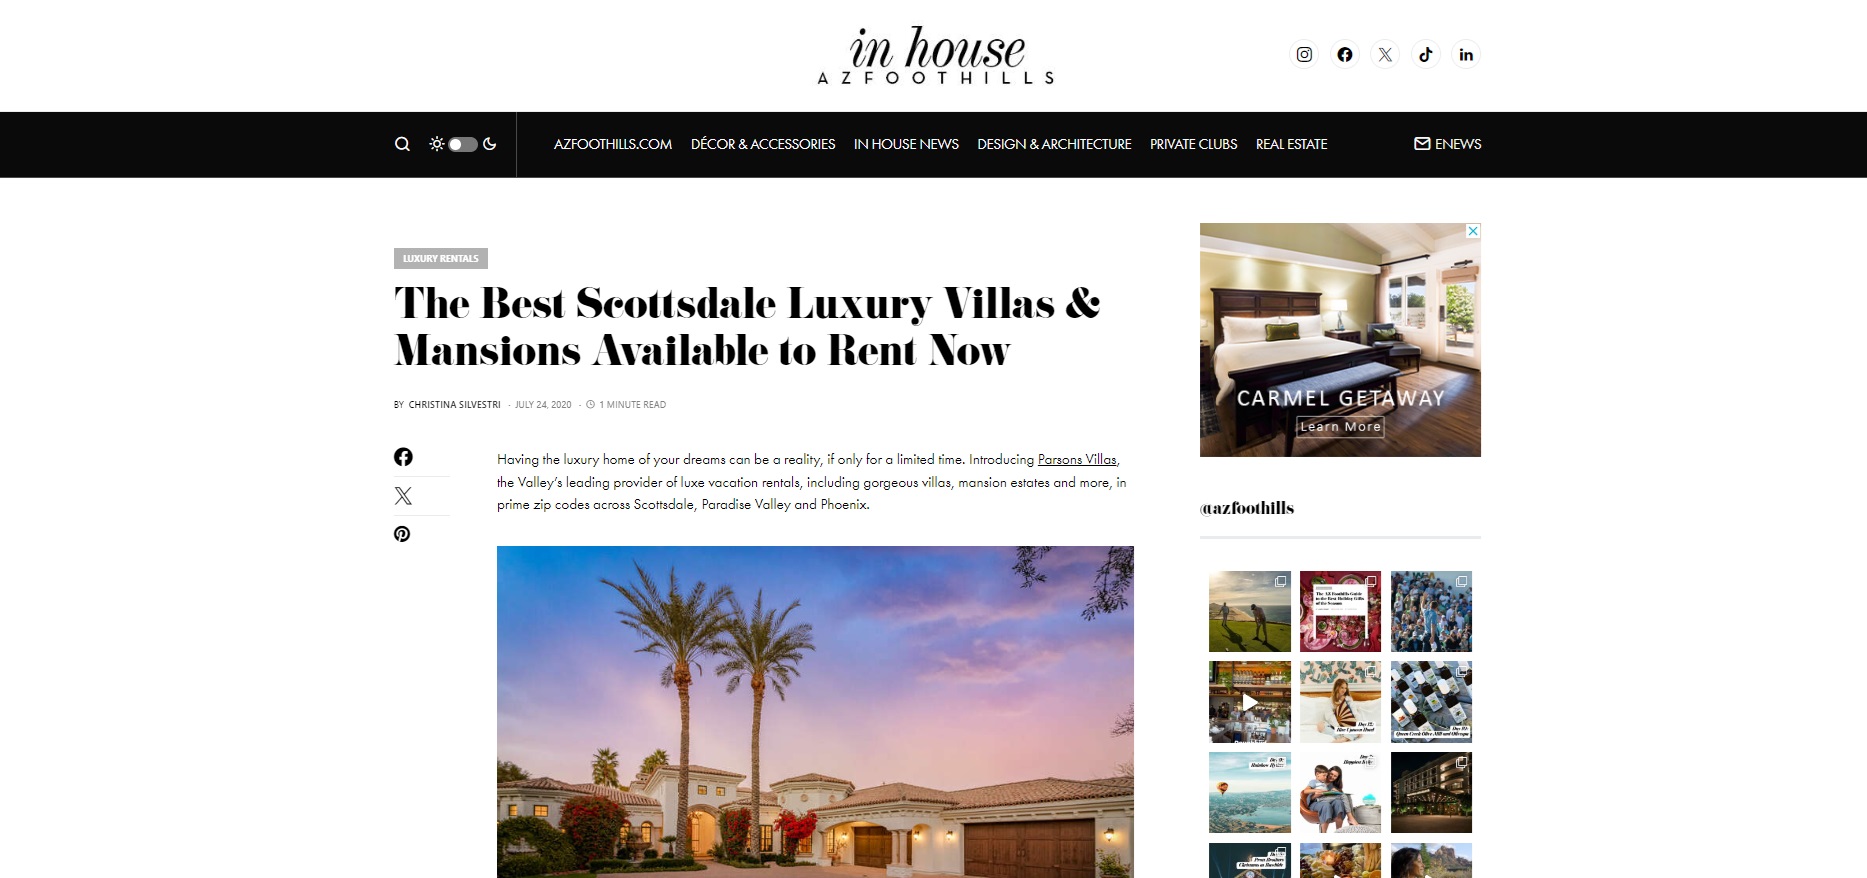 Arizona Foothills Magazine – Scottsdale Luxury Villas & Mansions